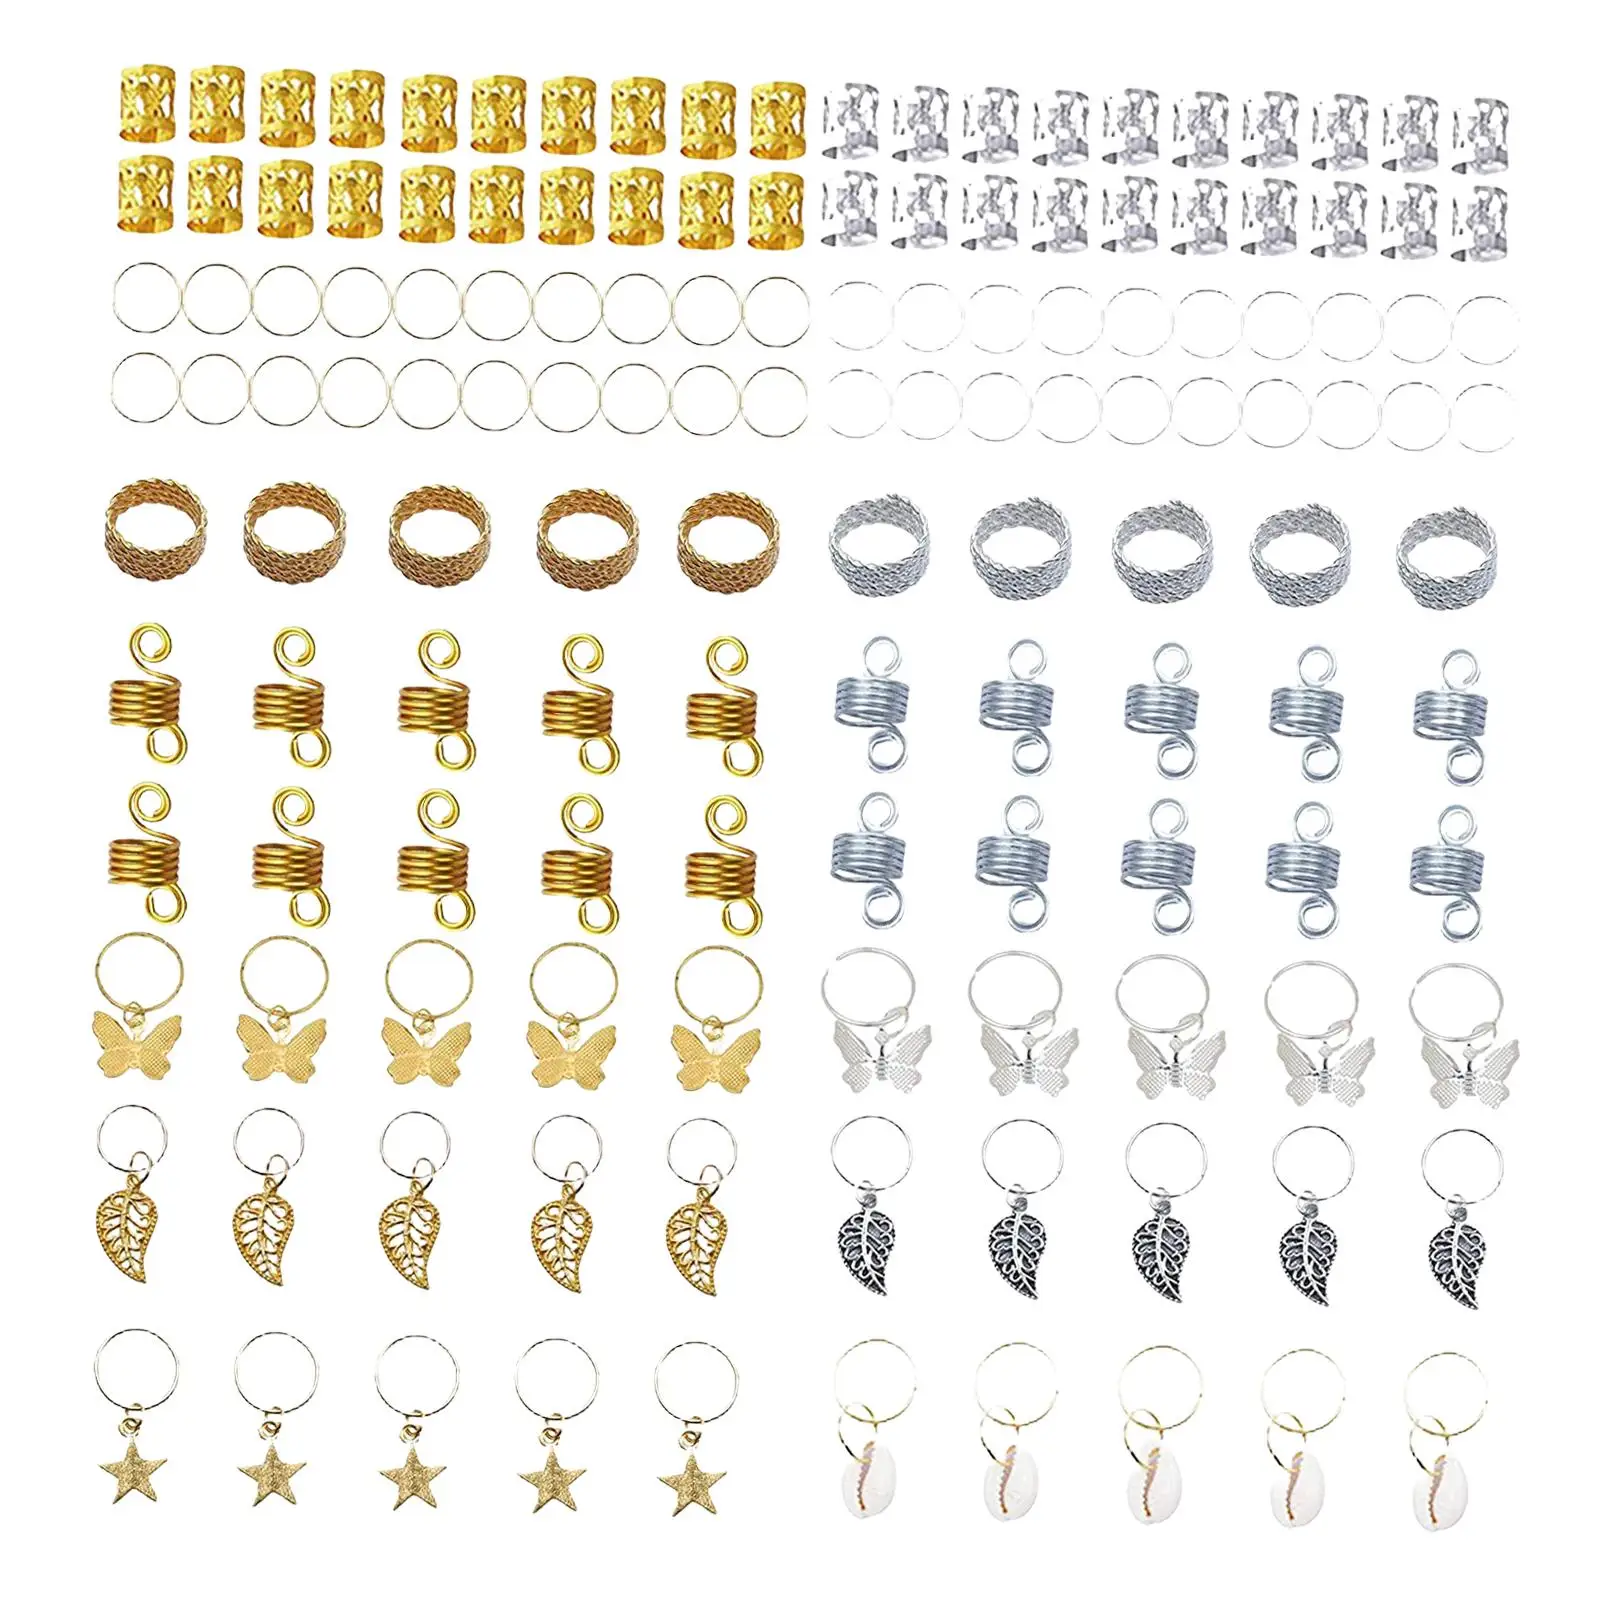 140x Hair Braiding Beads, Metal Hair Jewelry Hoops Rings Cuffs Clips Kit for Women Braids